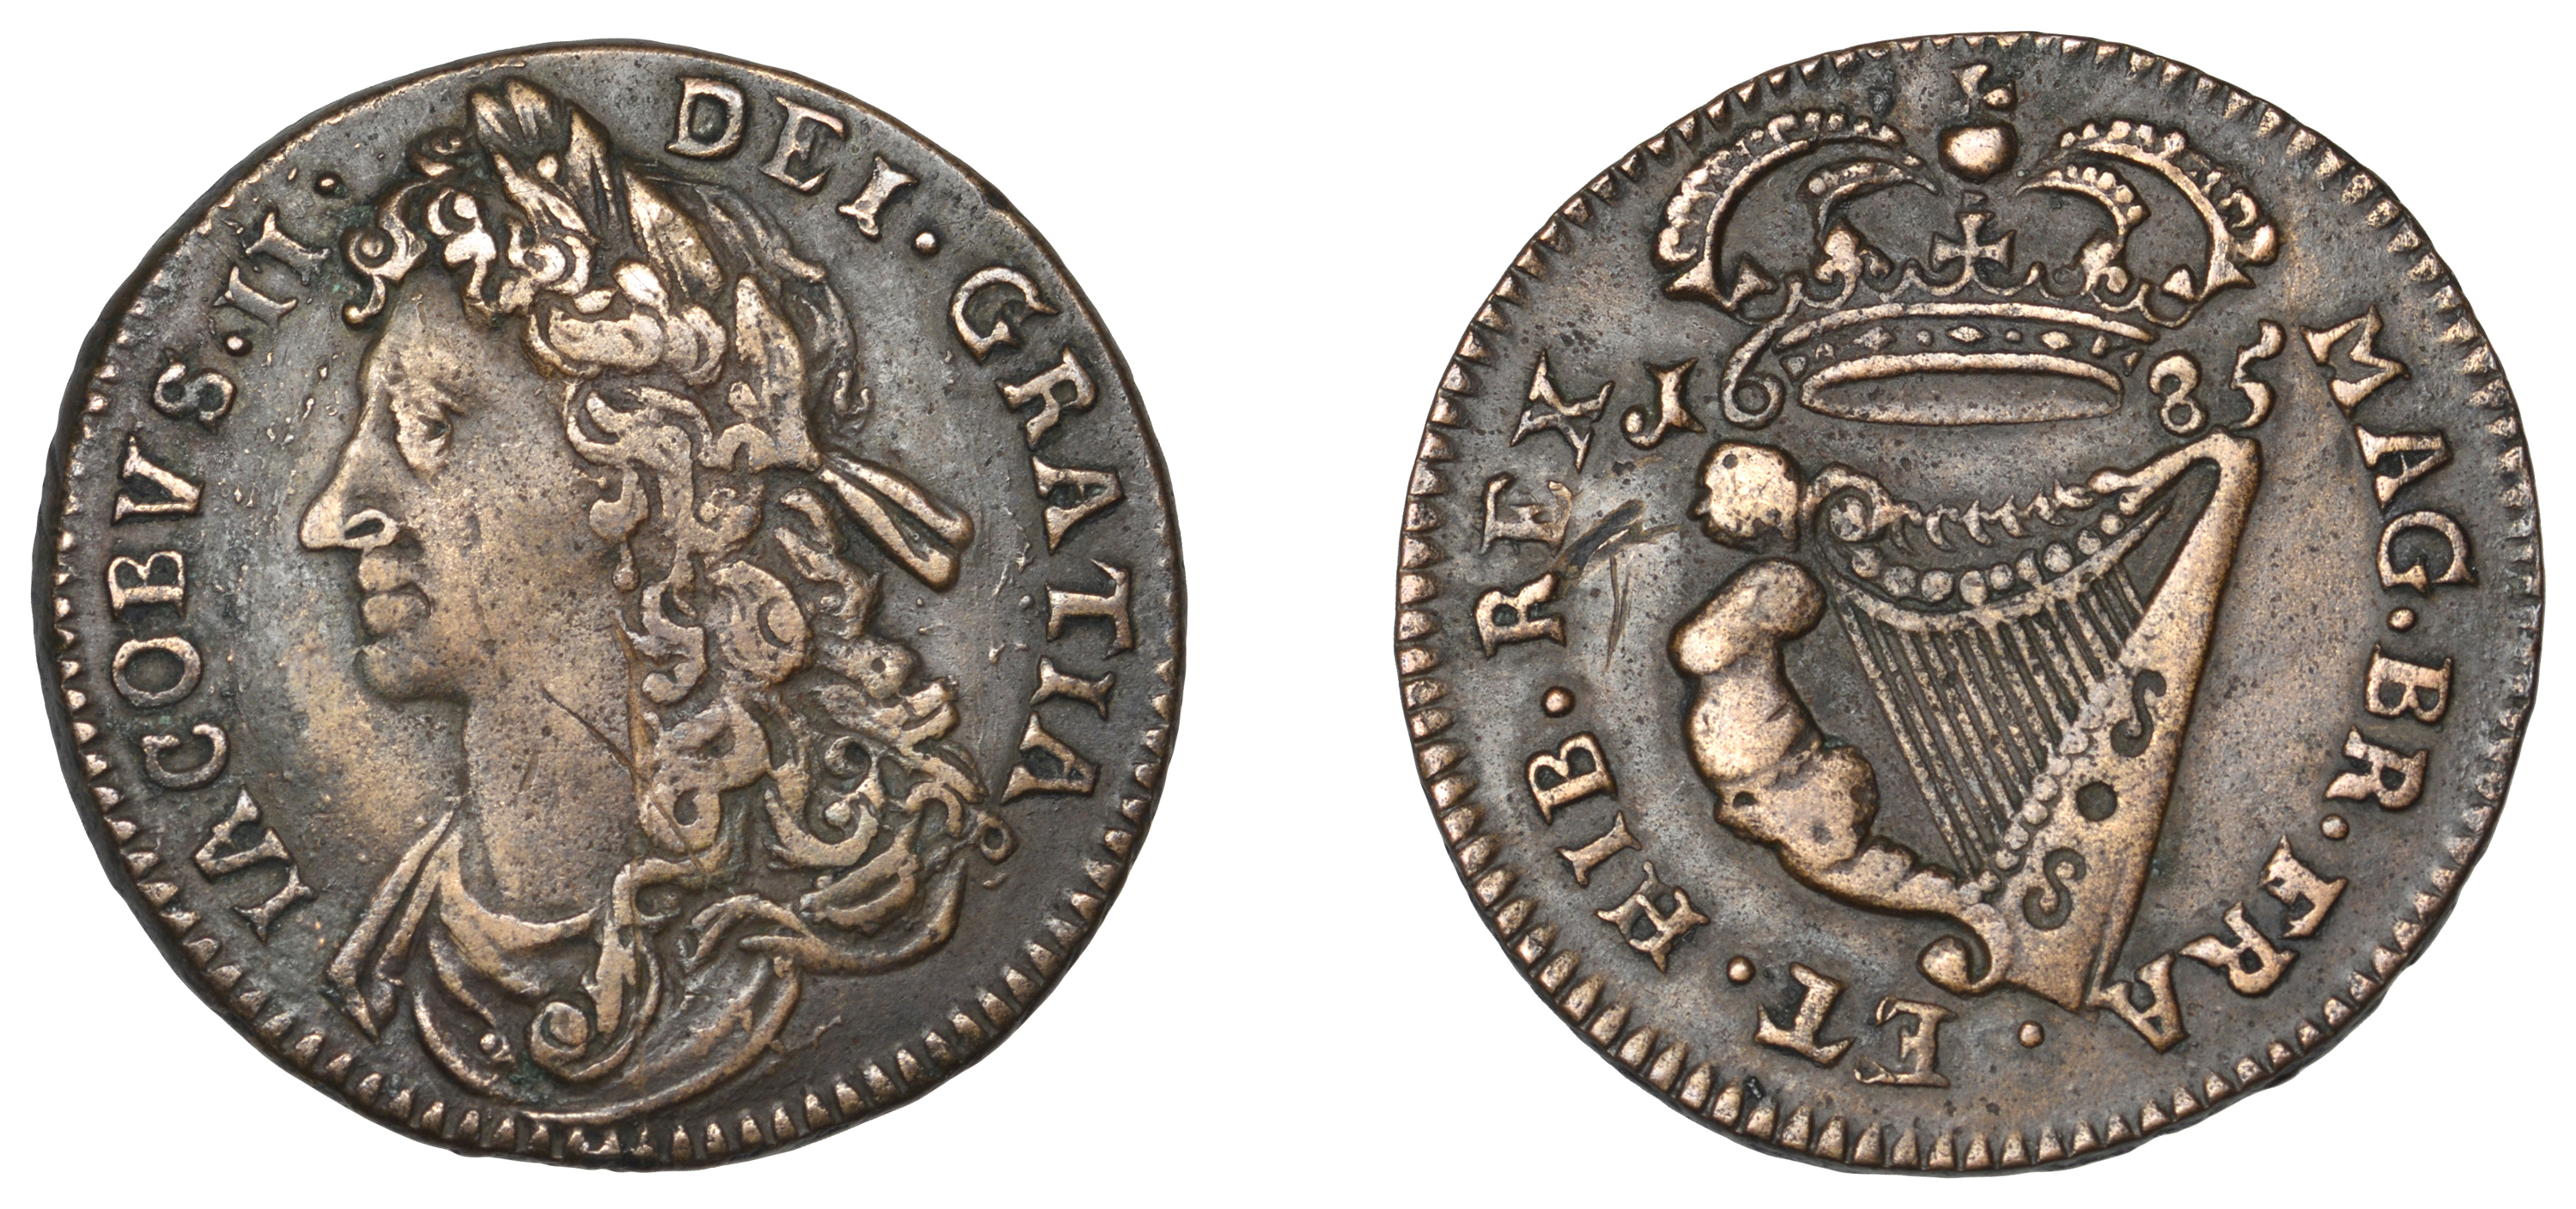 James II (1685-1691), Halfpenny, 1685 (S 6576). About very fine Â£100-Â£150